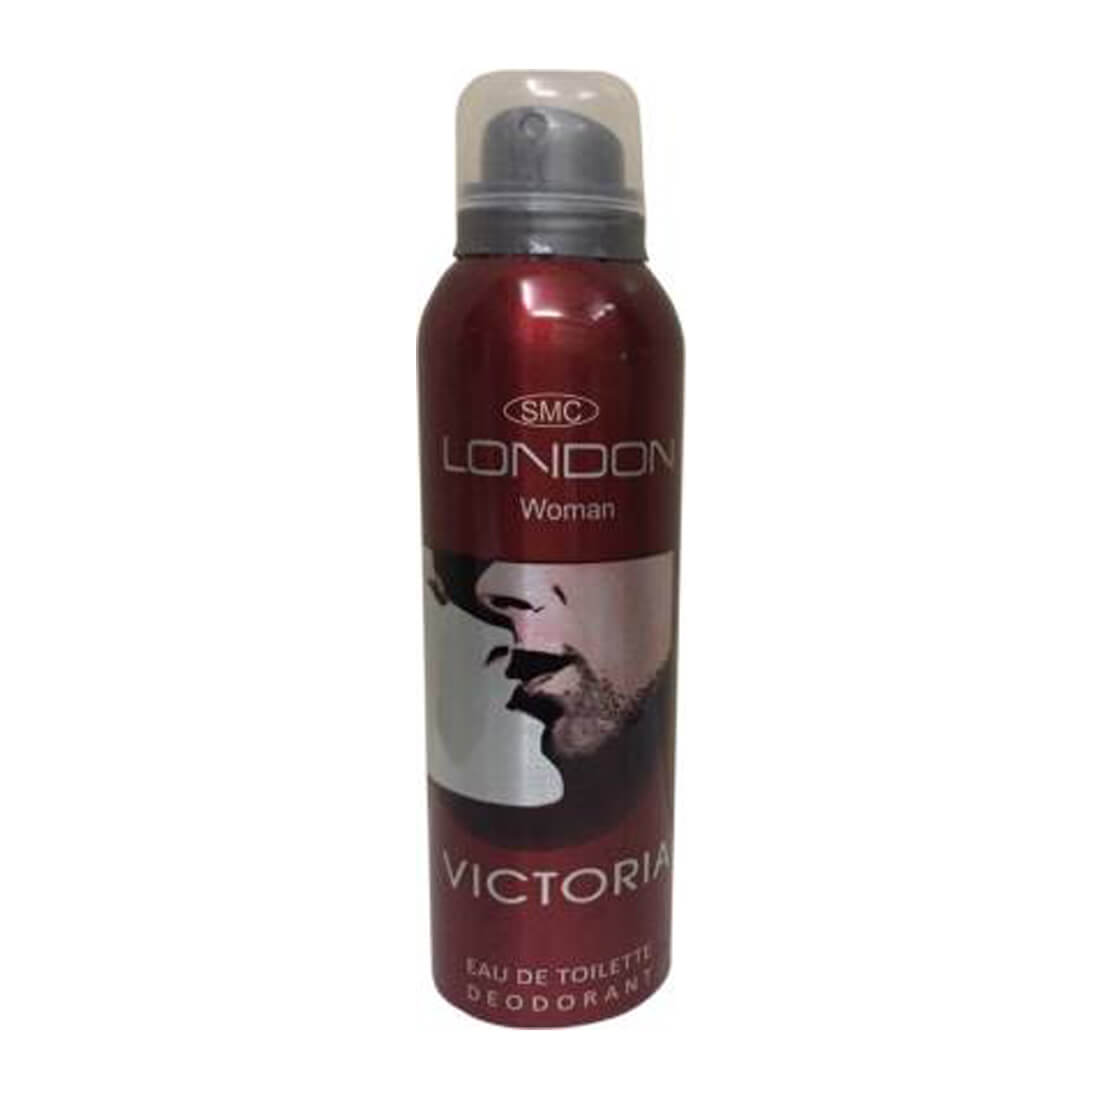 London Victoria Deodorant Body Spray 200ml